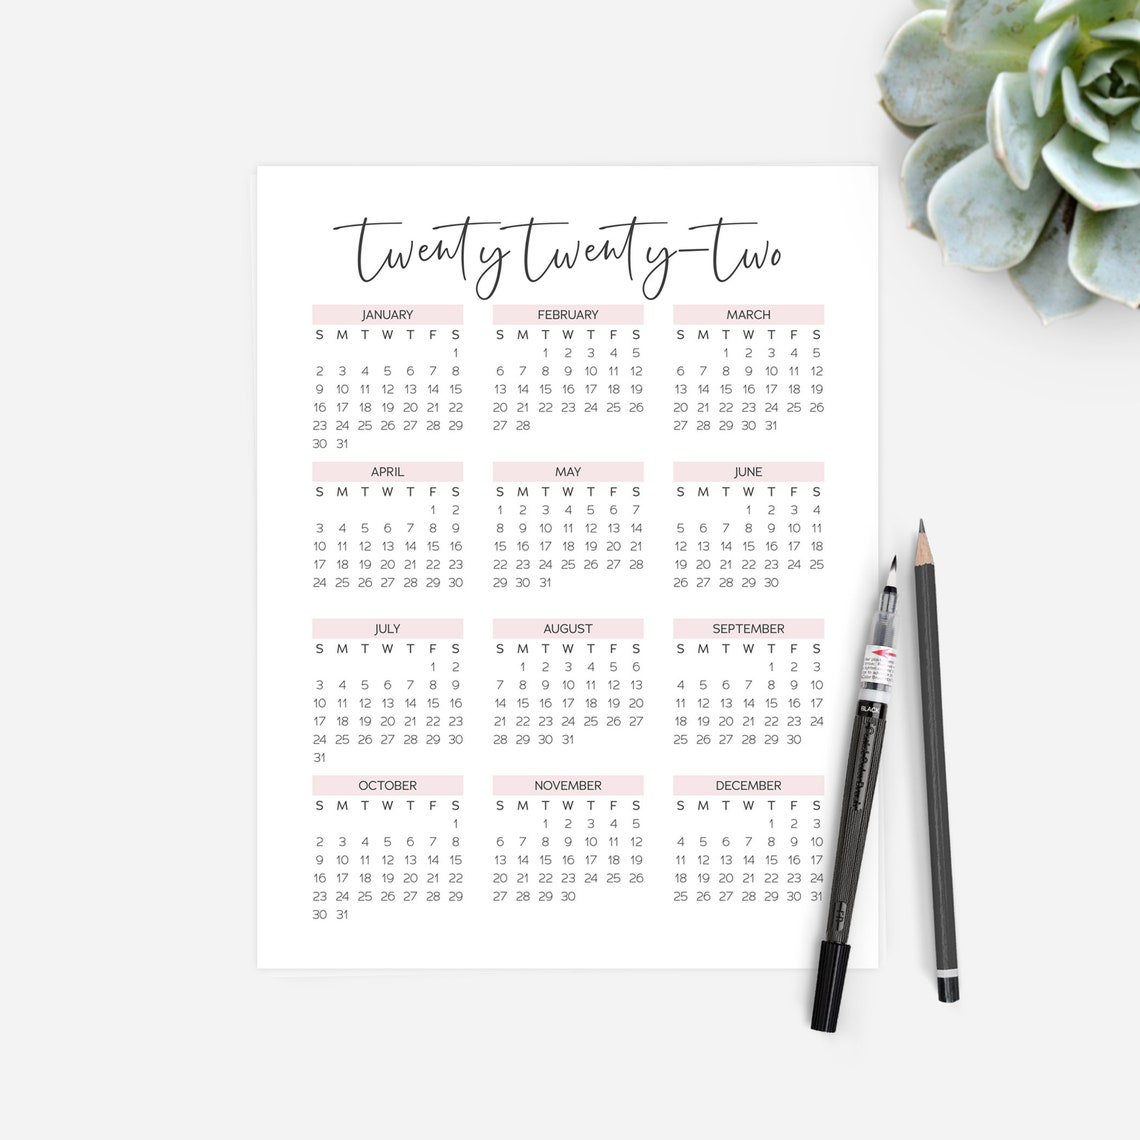 2022 Yearly Calendar Year At A Glance Calendar Blush Pink | Etsy inside 2022 Year At A Glance